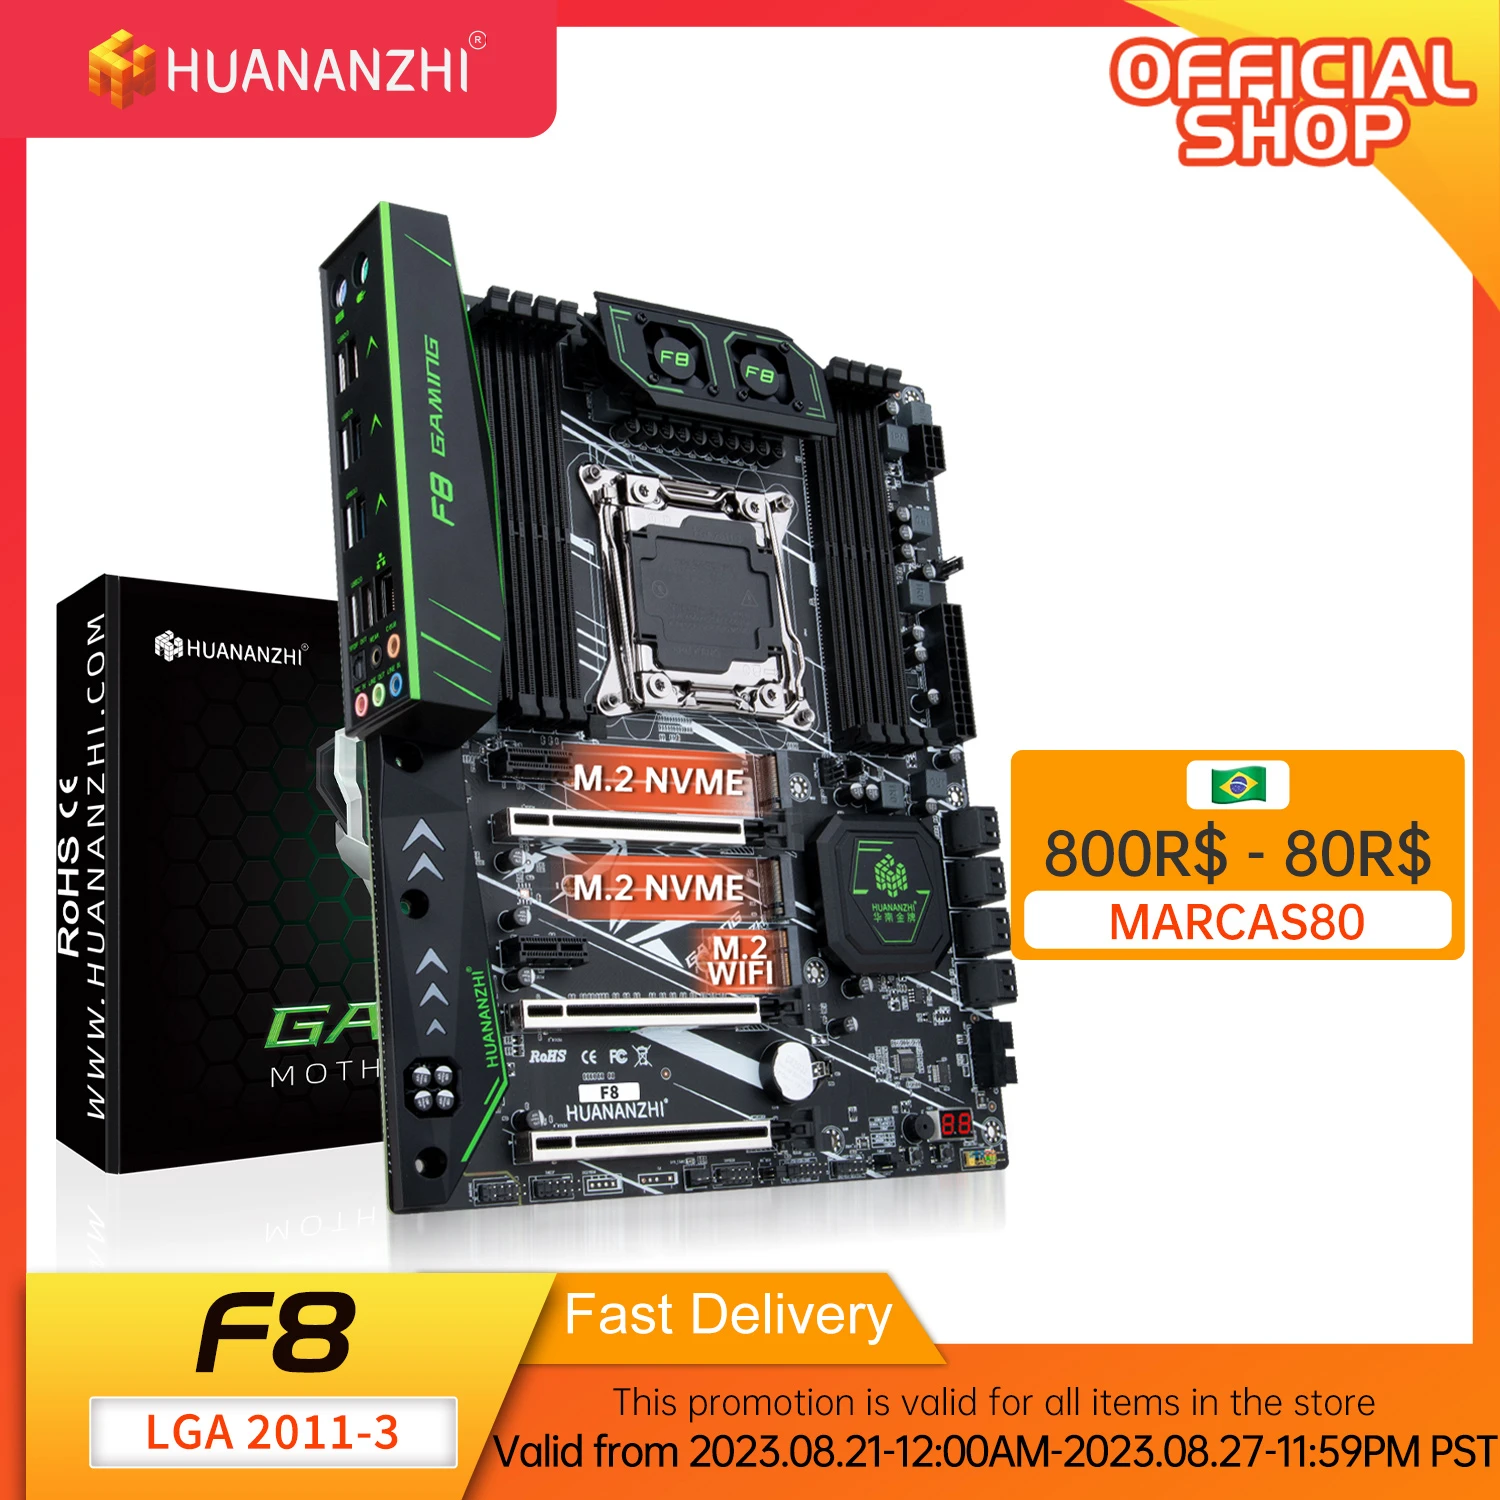 HUANANZHI X99 F8 X99 Motherboard Intel XEON E5 LGA2011-3 All Series DDR4 RECC NON-ECC memory NVME USB3.0 ATX Server workstation